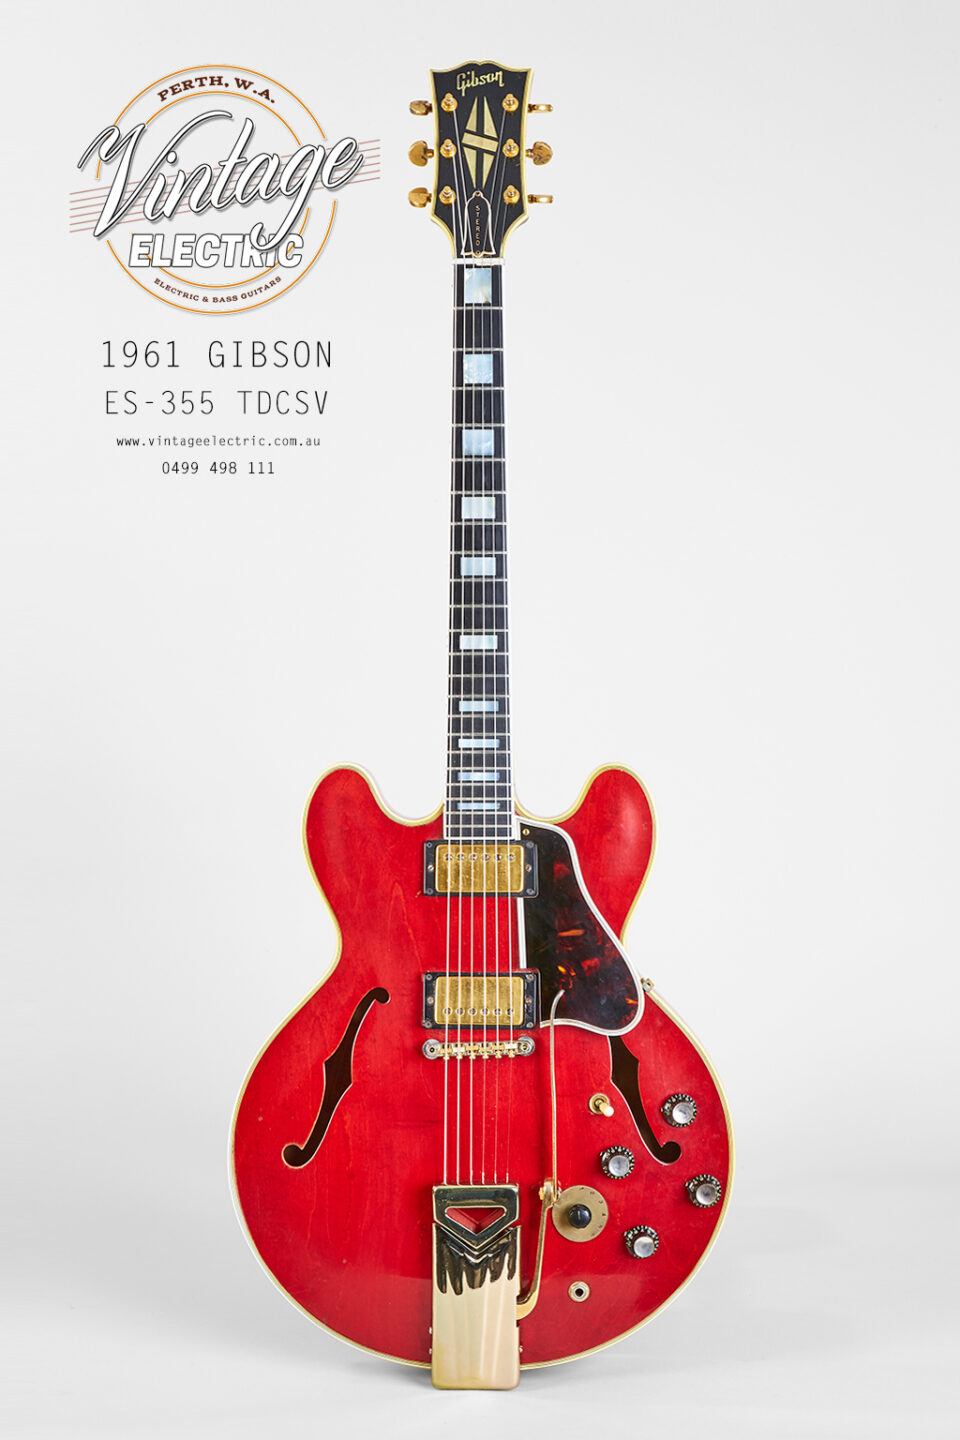 1961 Gibson ES-355 TDCSV